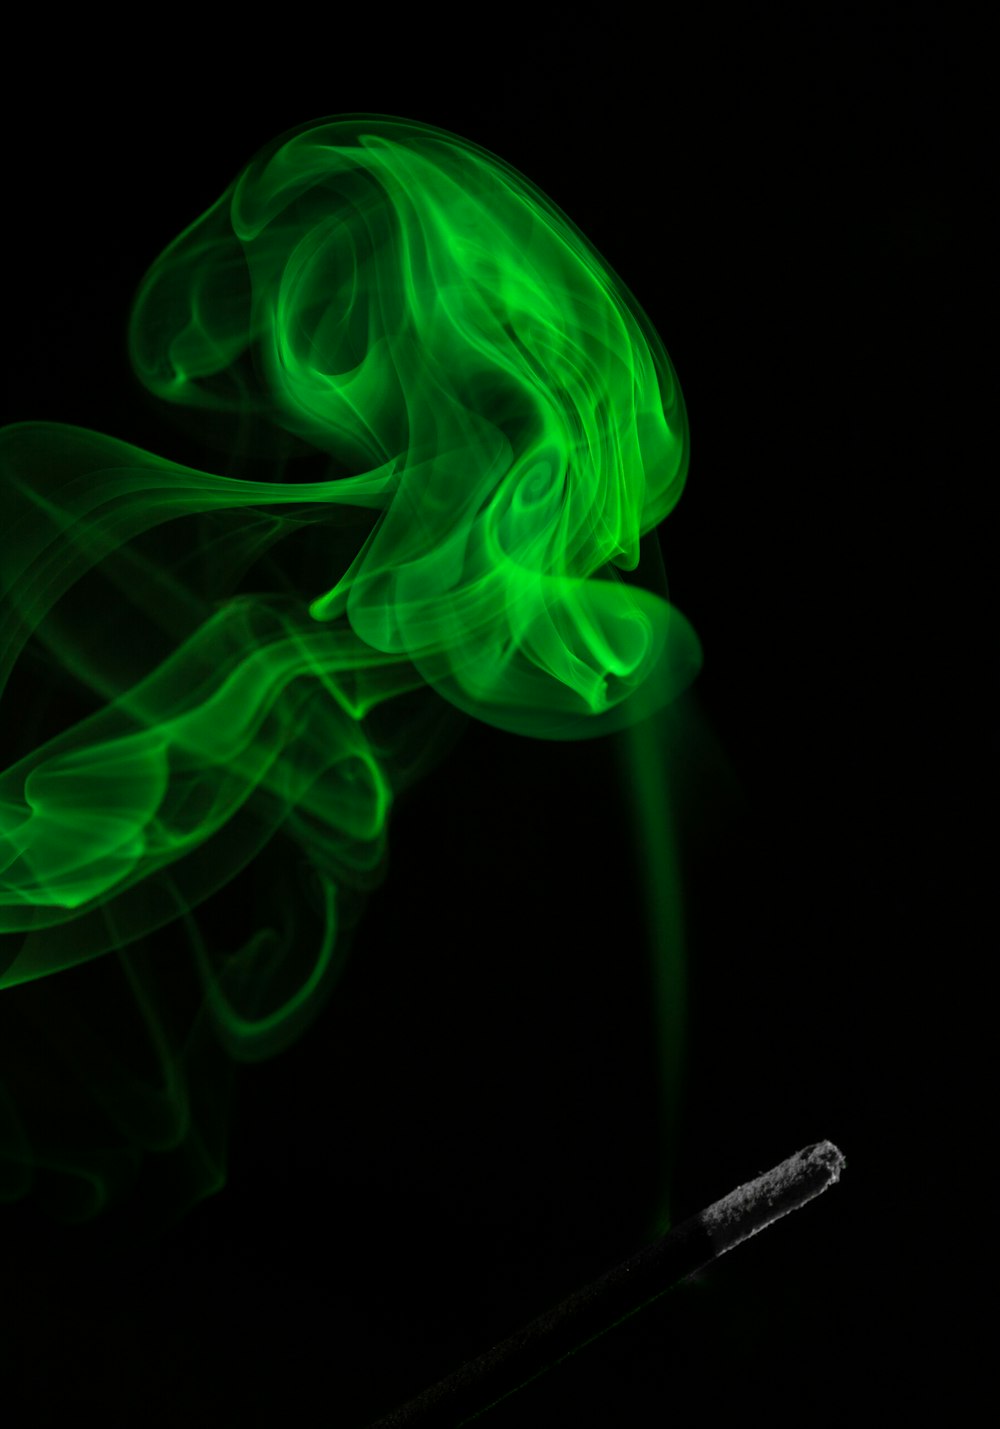 green smoke on dim light photo – Free Smoke Image on Unsplash